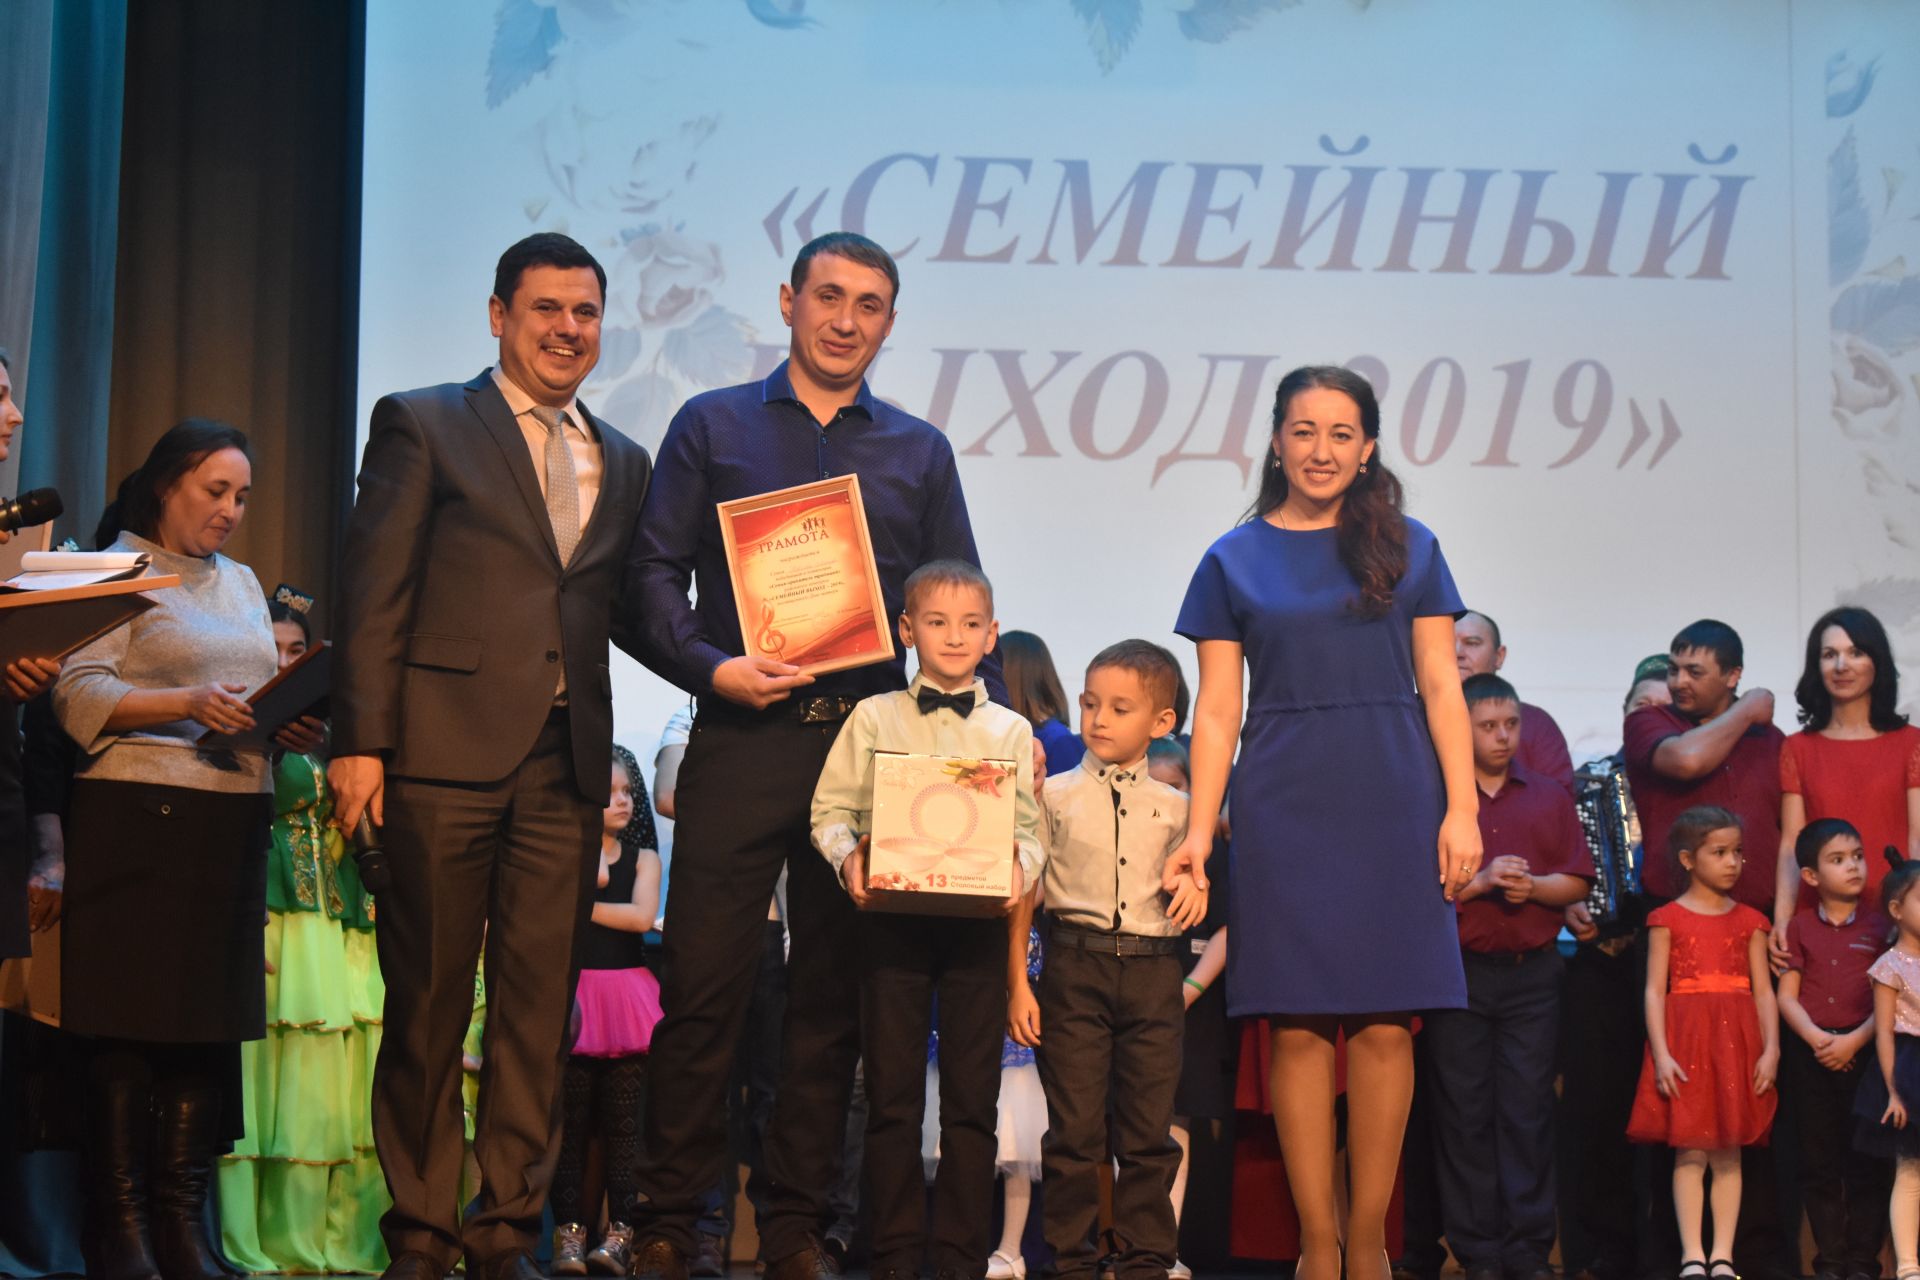 Районный конкурс «Семейный выход»-2019